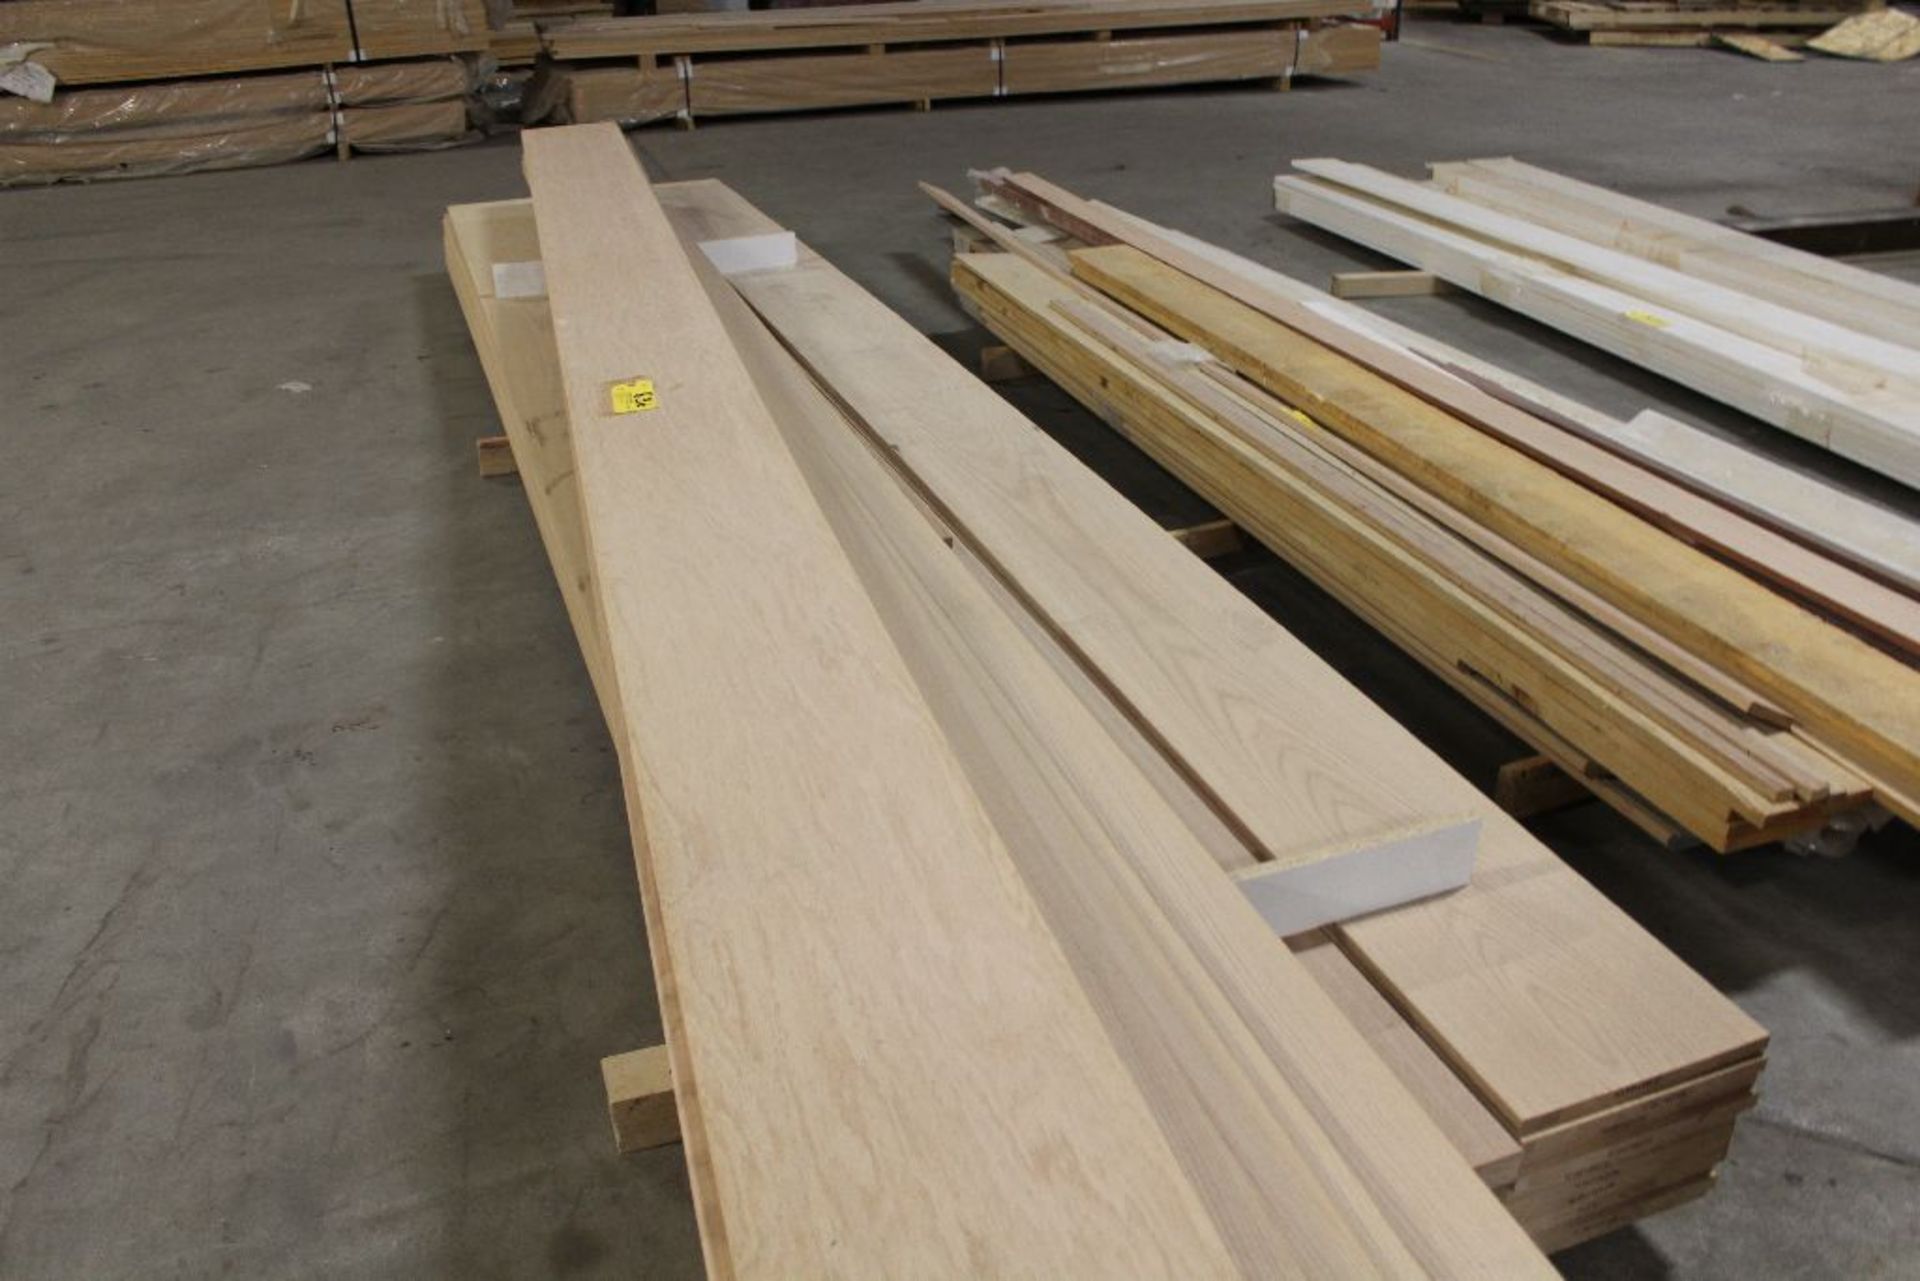 Lumber oak plank, 3/4" x 12" x 16'. - Image 4 of 4